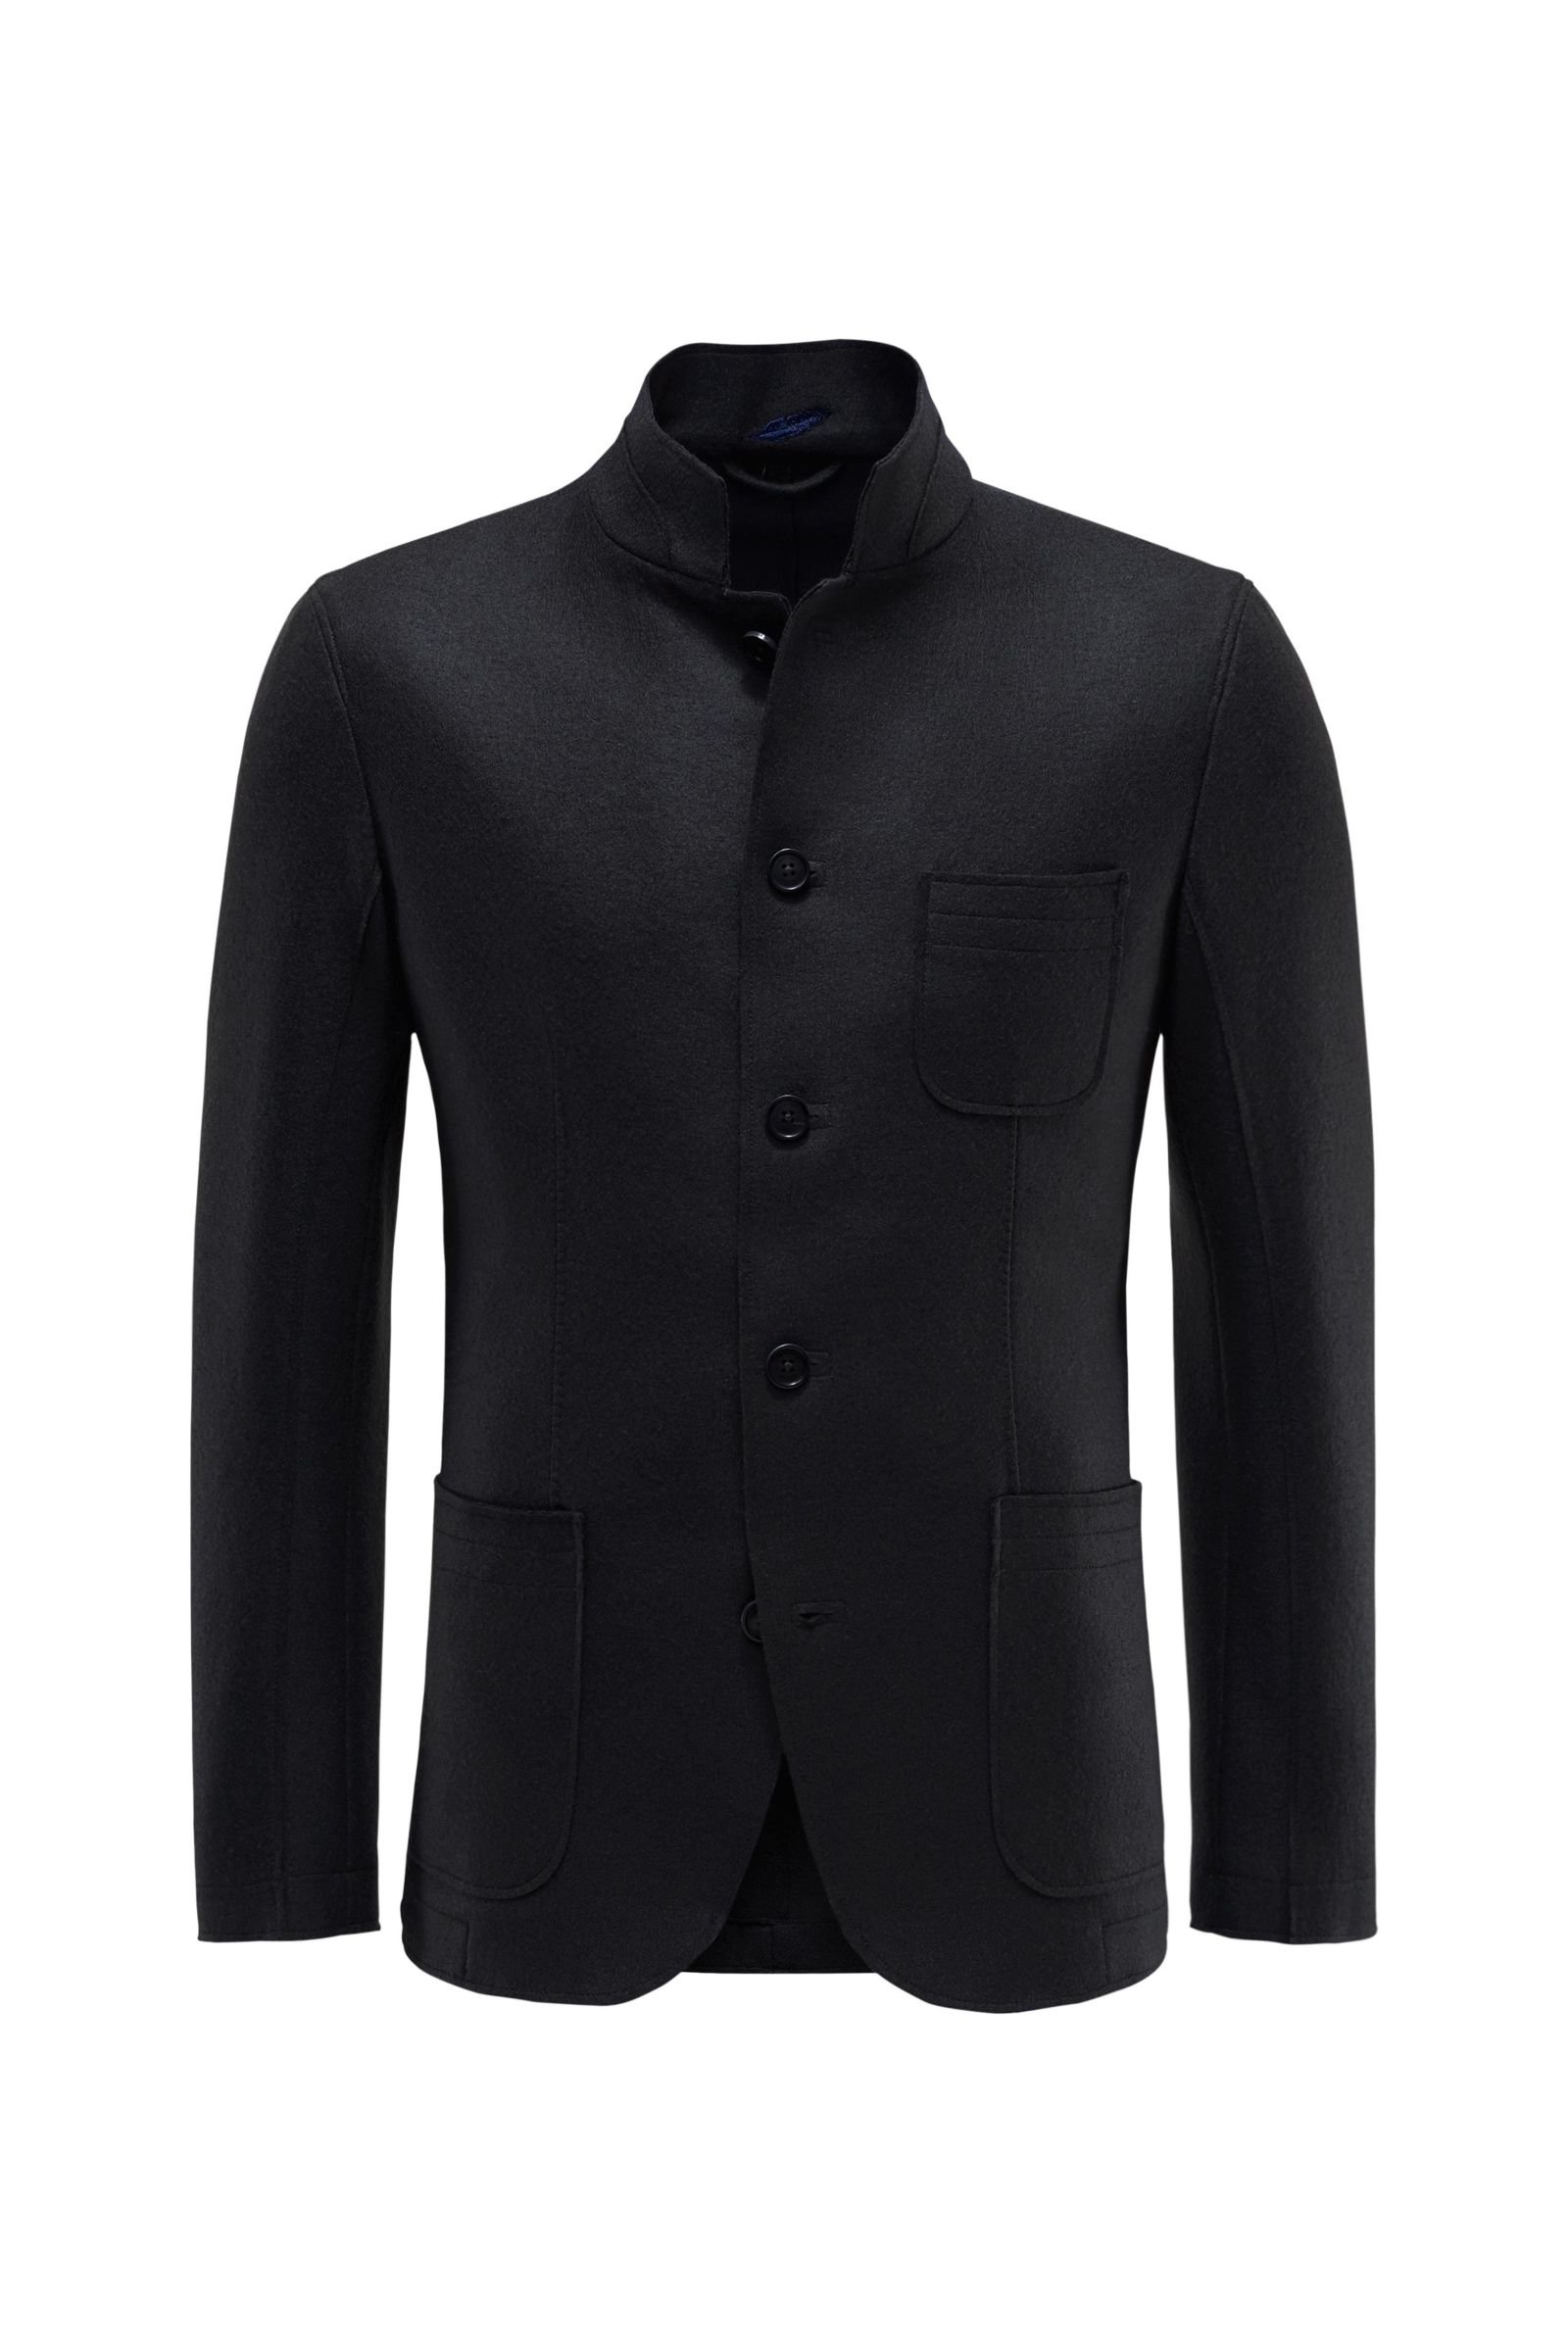 Loden jacket black